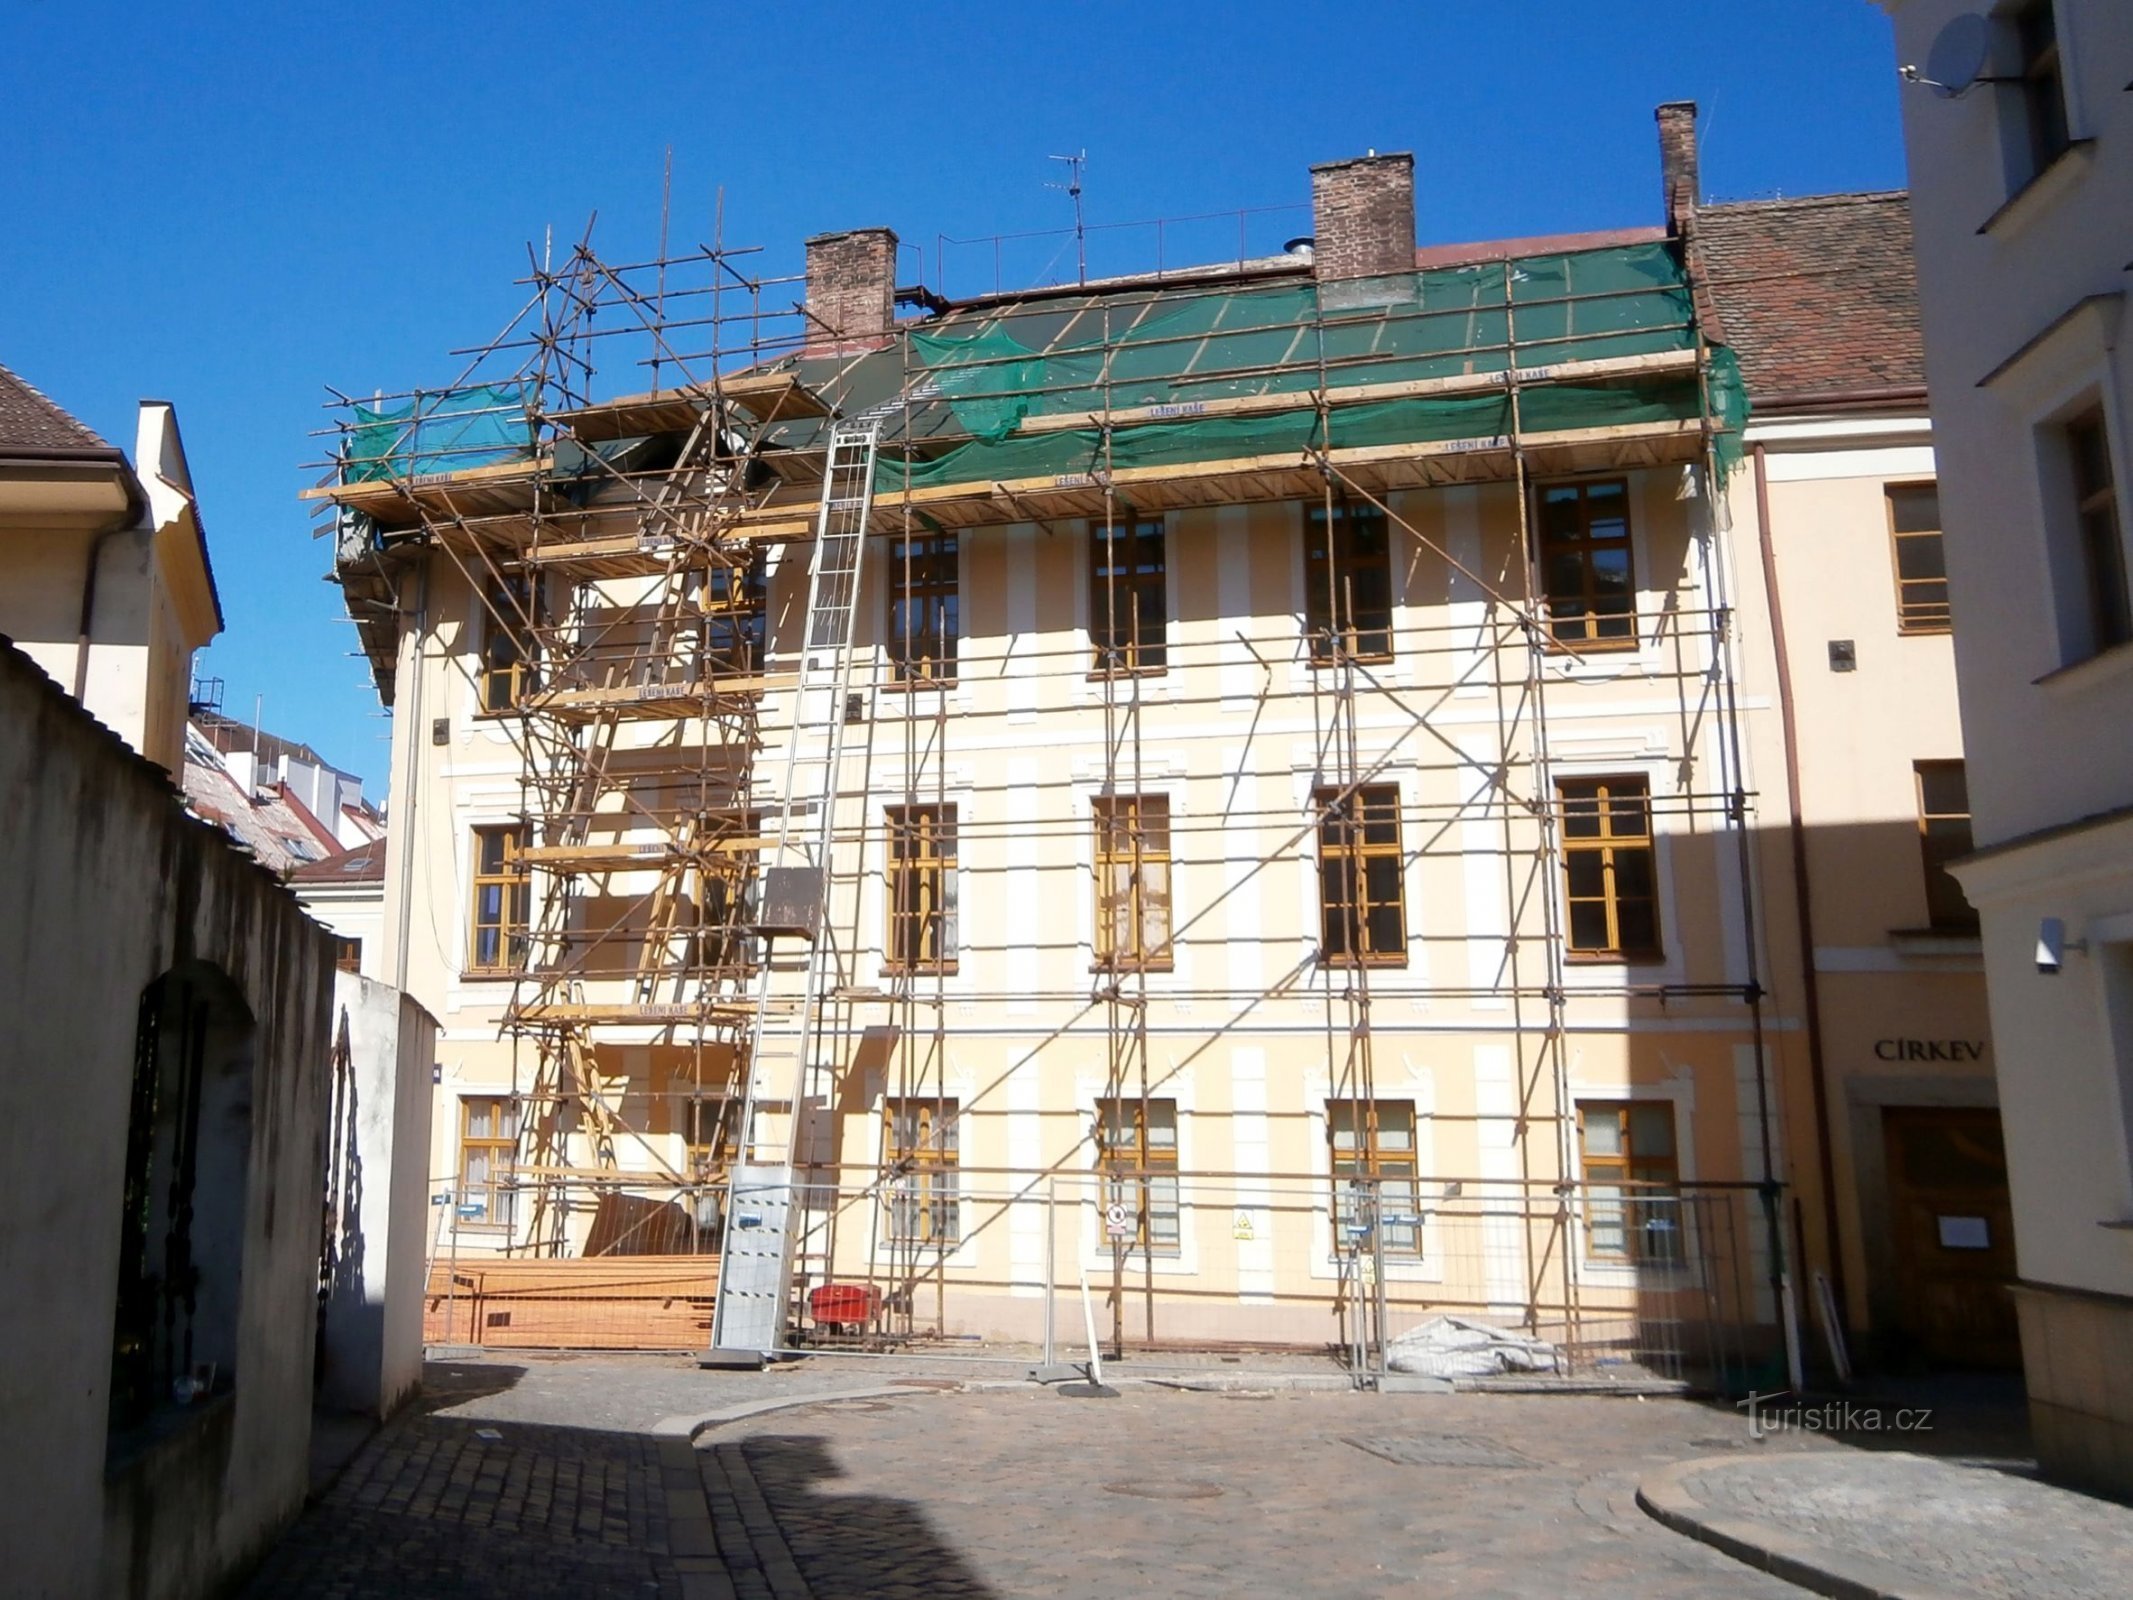 Riparazione del tetto al n. 89 (Hradec Králové, 18.6.2016/XNUMX/XNUMX)